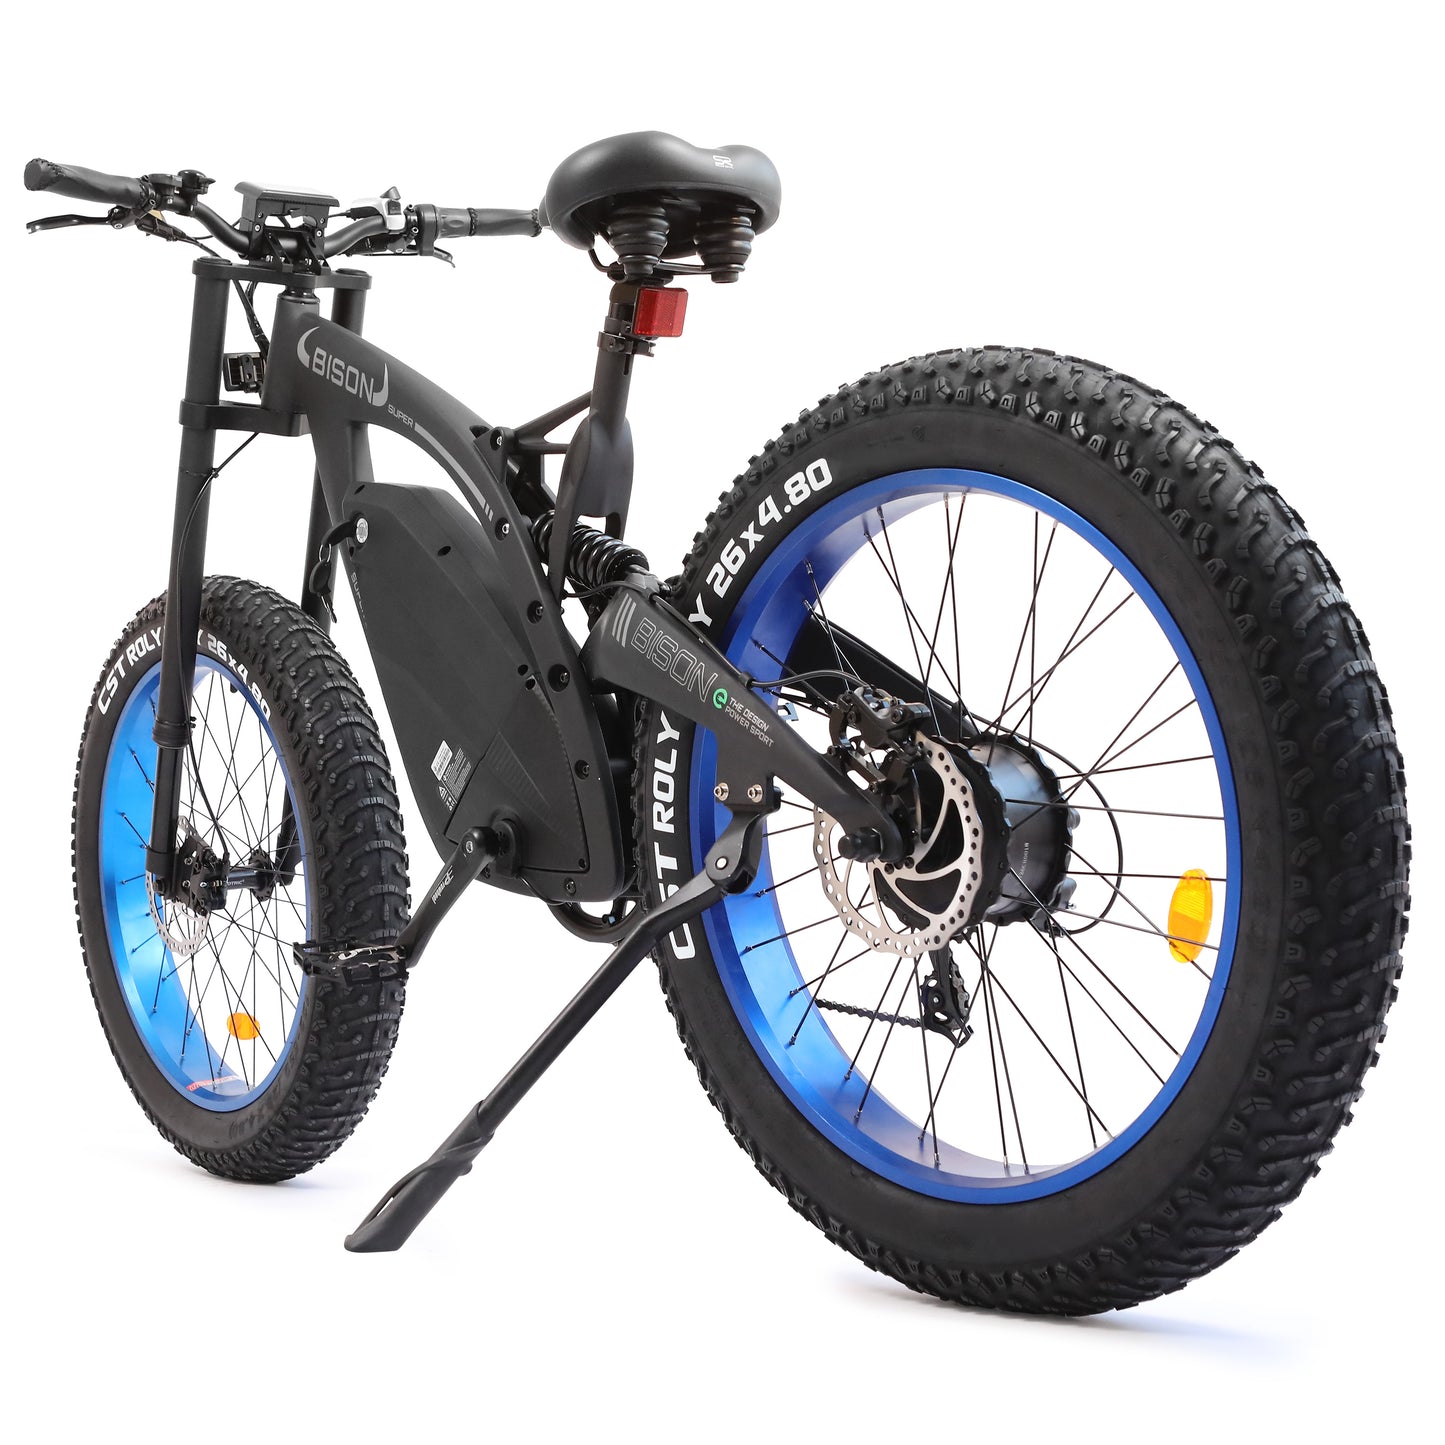 Ecotric Bison 48v 17.6AH 1000W Big Fat Tire Electric Bike - Matt Black